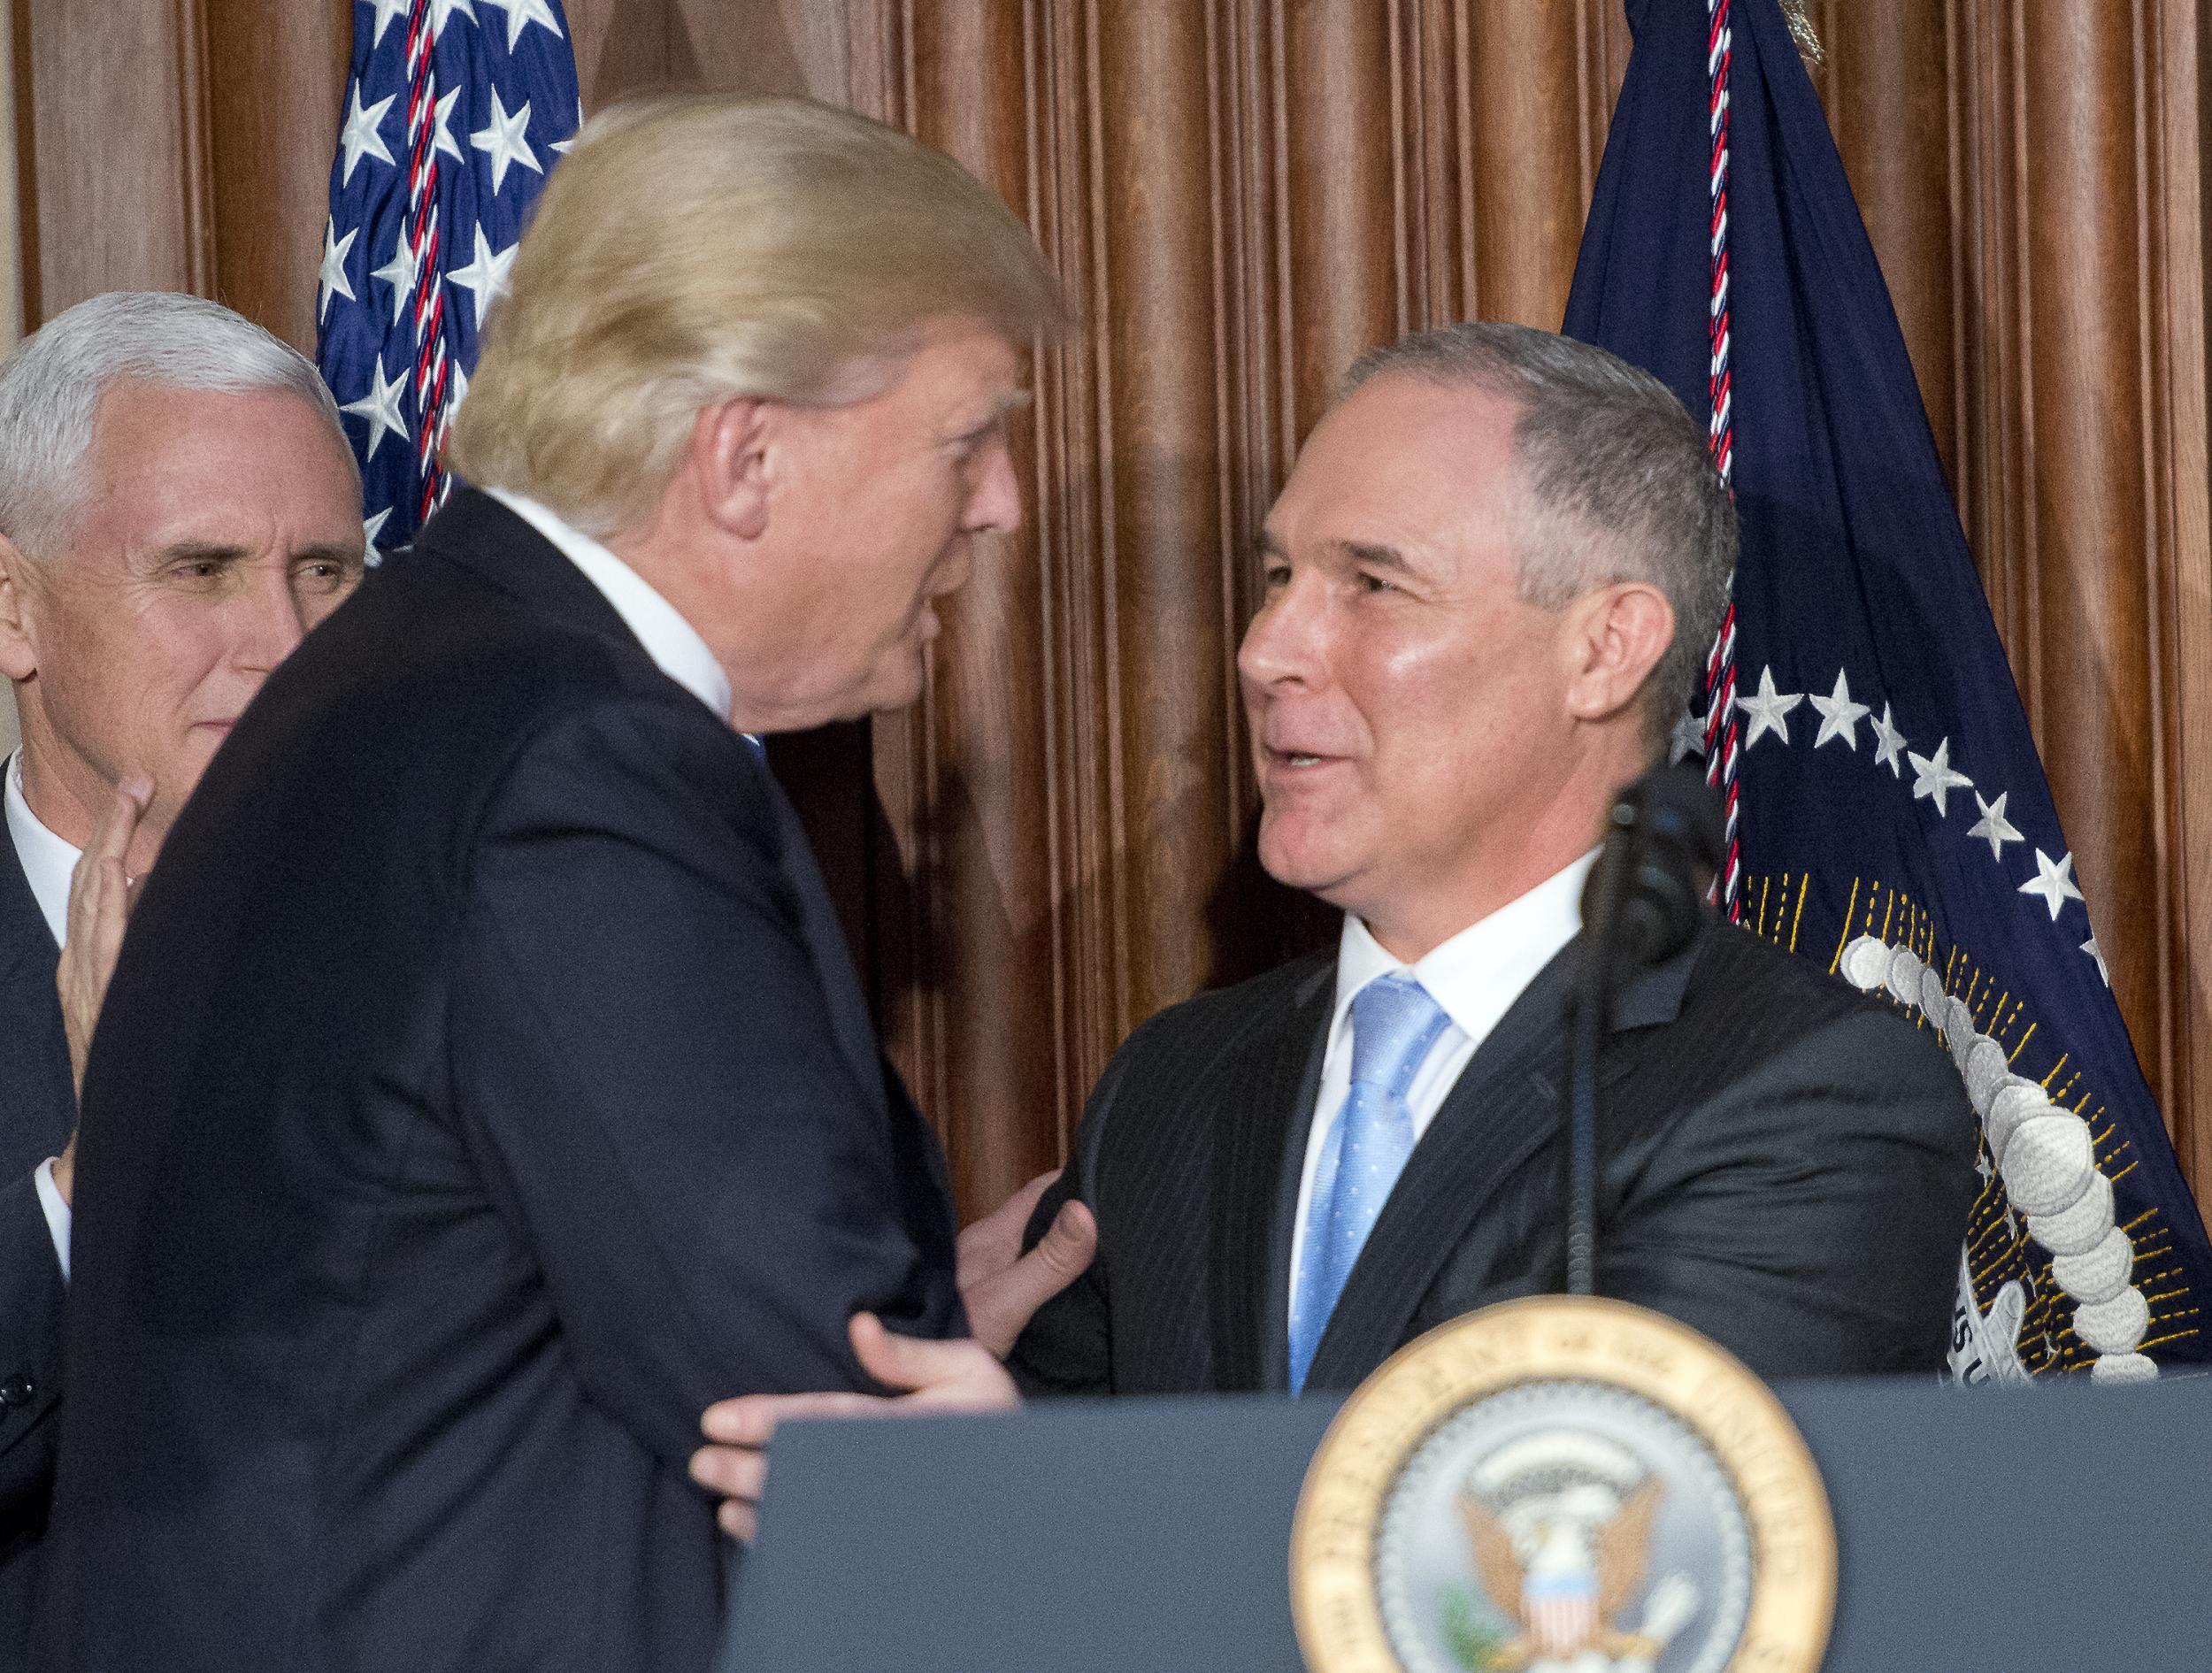 Donald Trump greets EPA Director Scott Pruitt